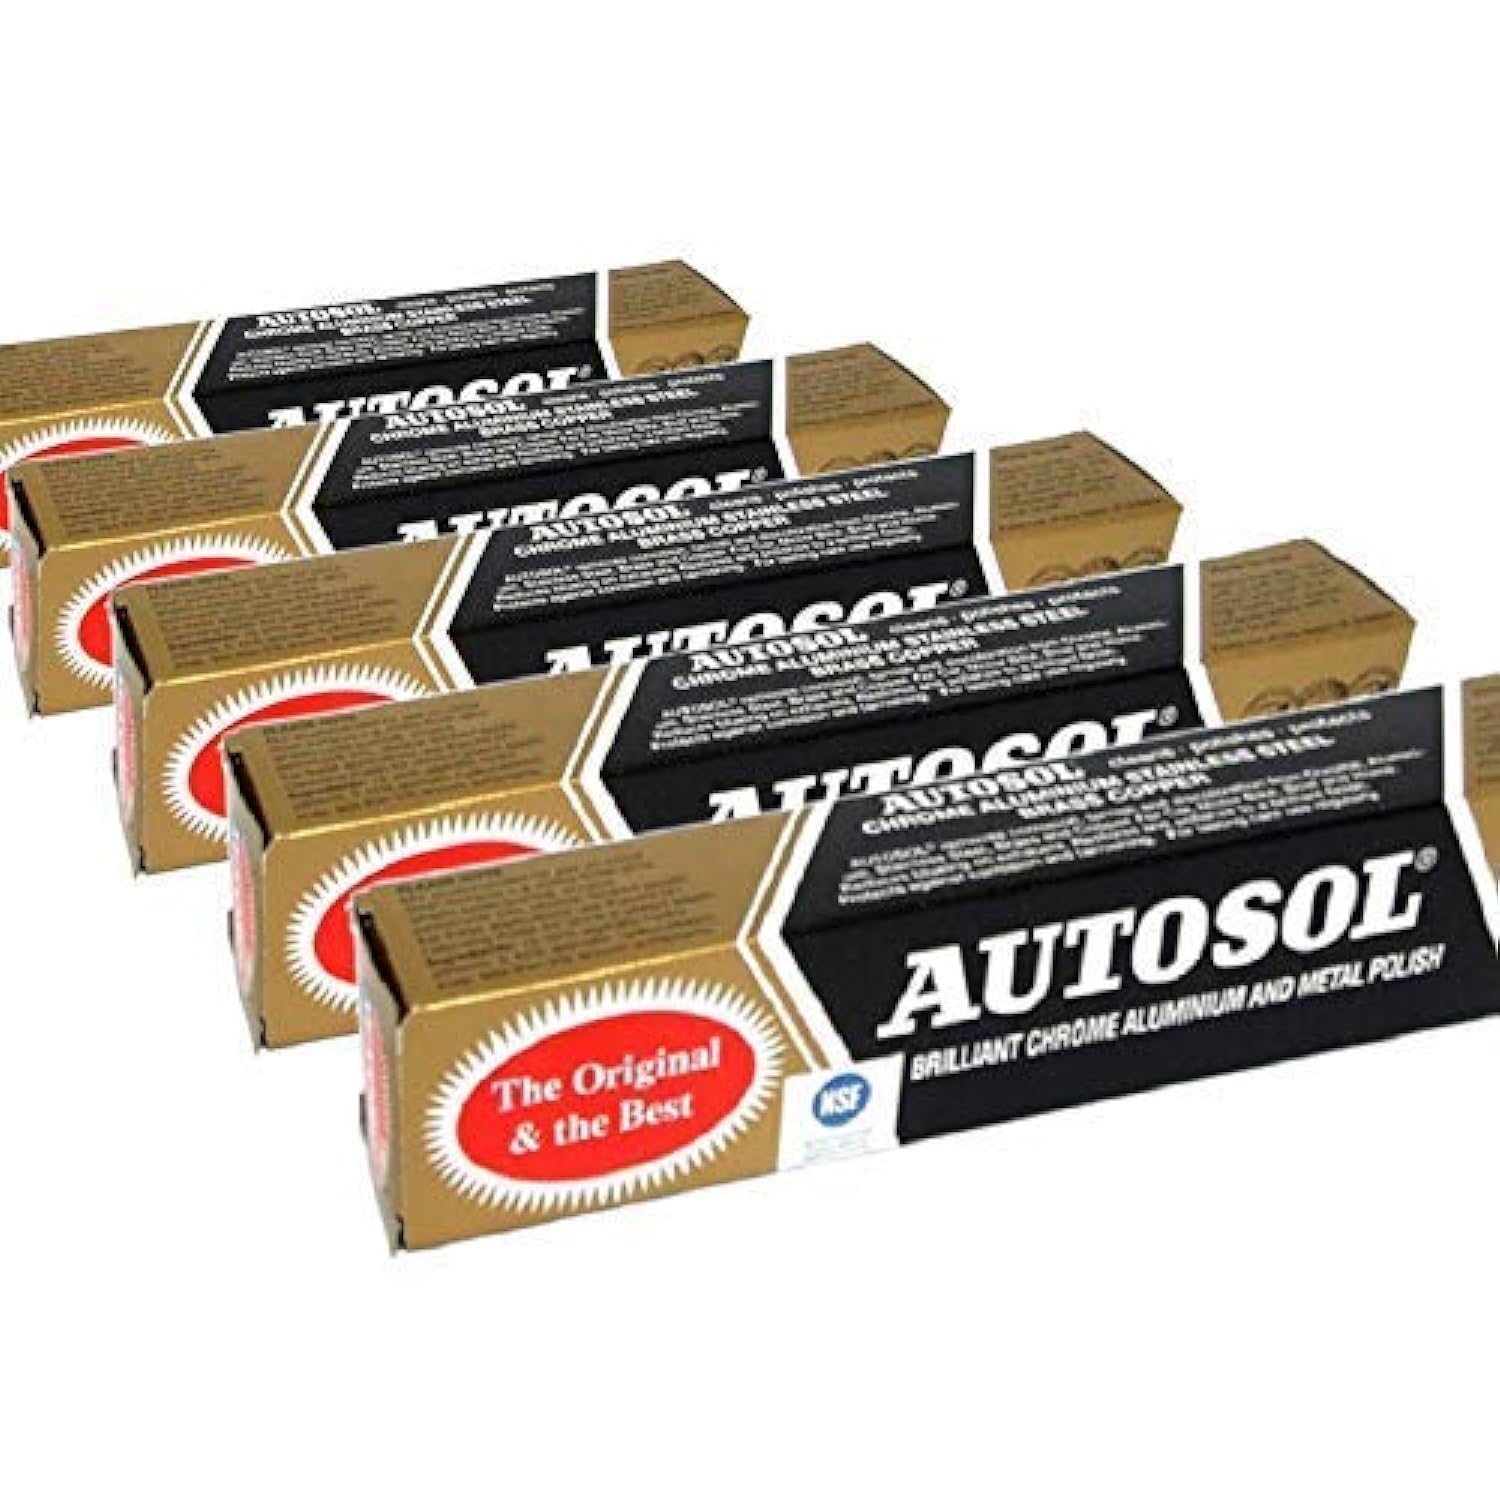 Autosol 5er Pack Metall Politur (75ml X5) Chrom Alu Edelstahl Messing Kupfer Usw von Autosol